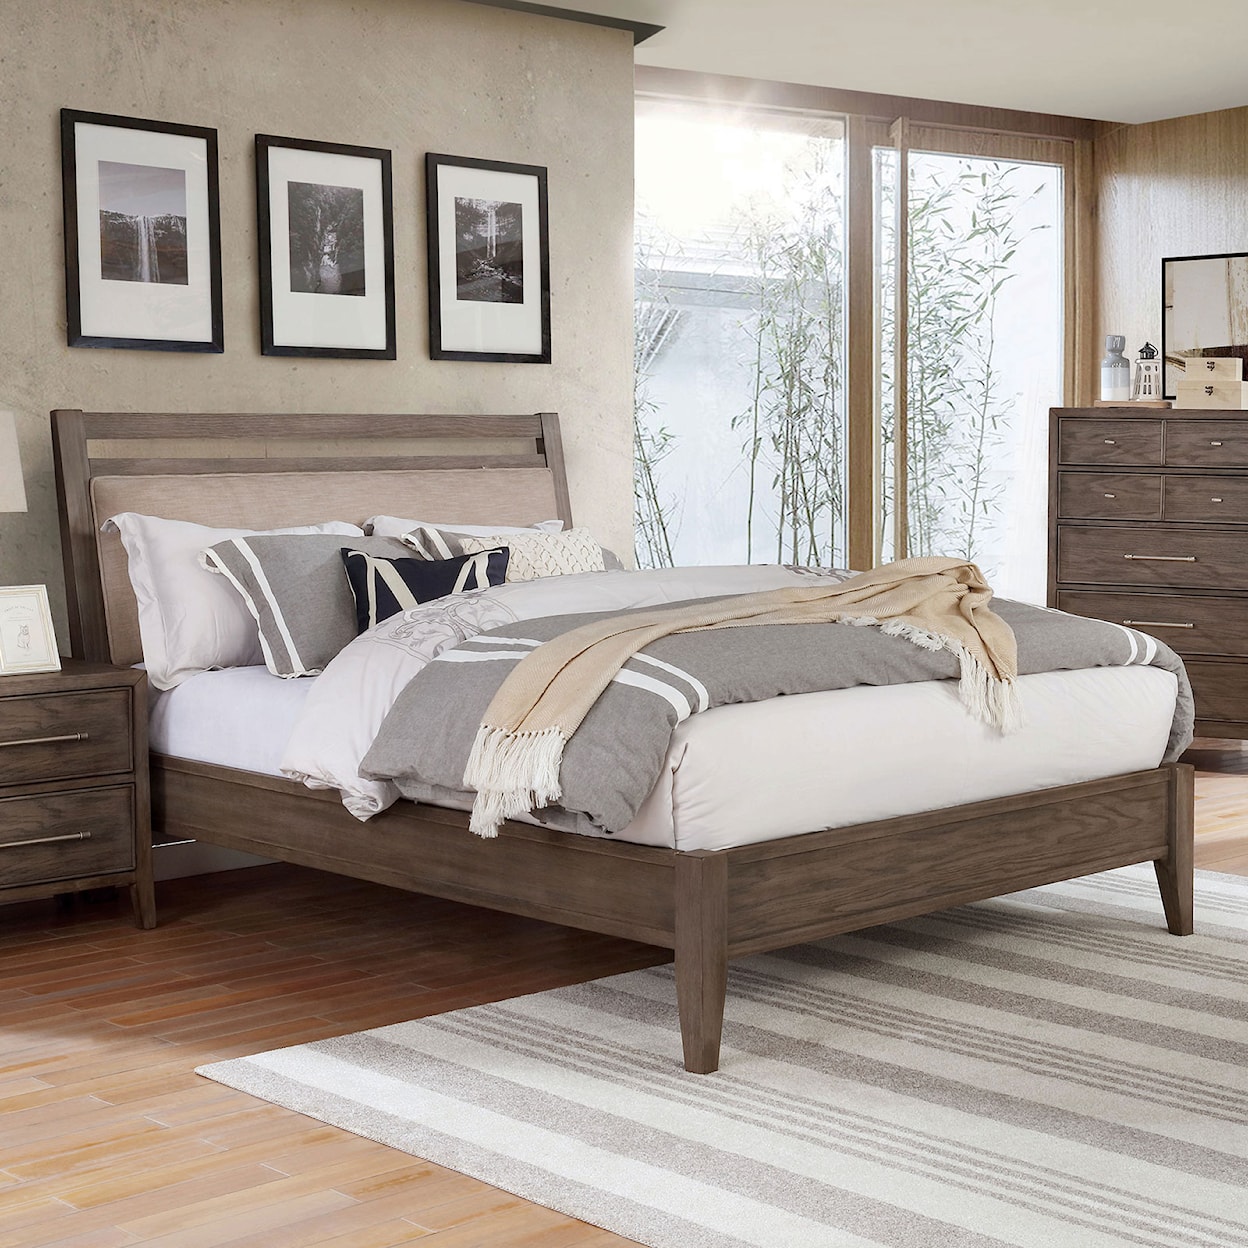 Furniture of America Tawana Queen Bed